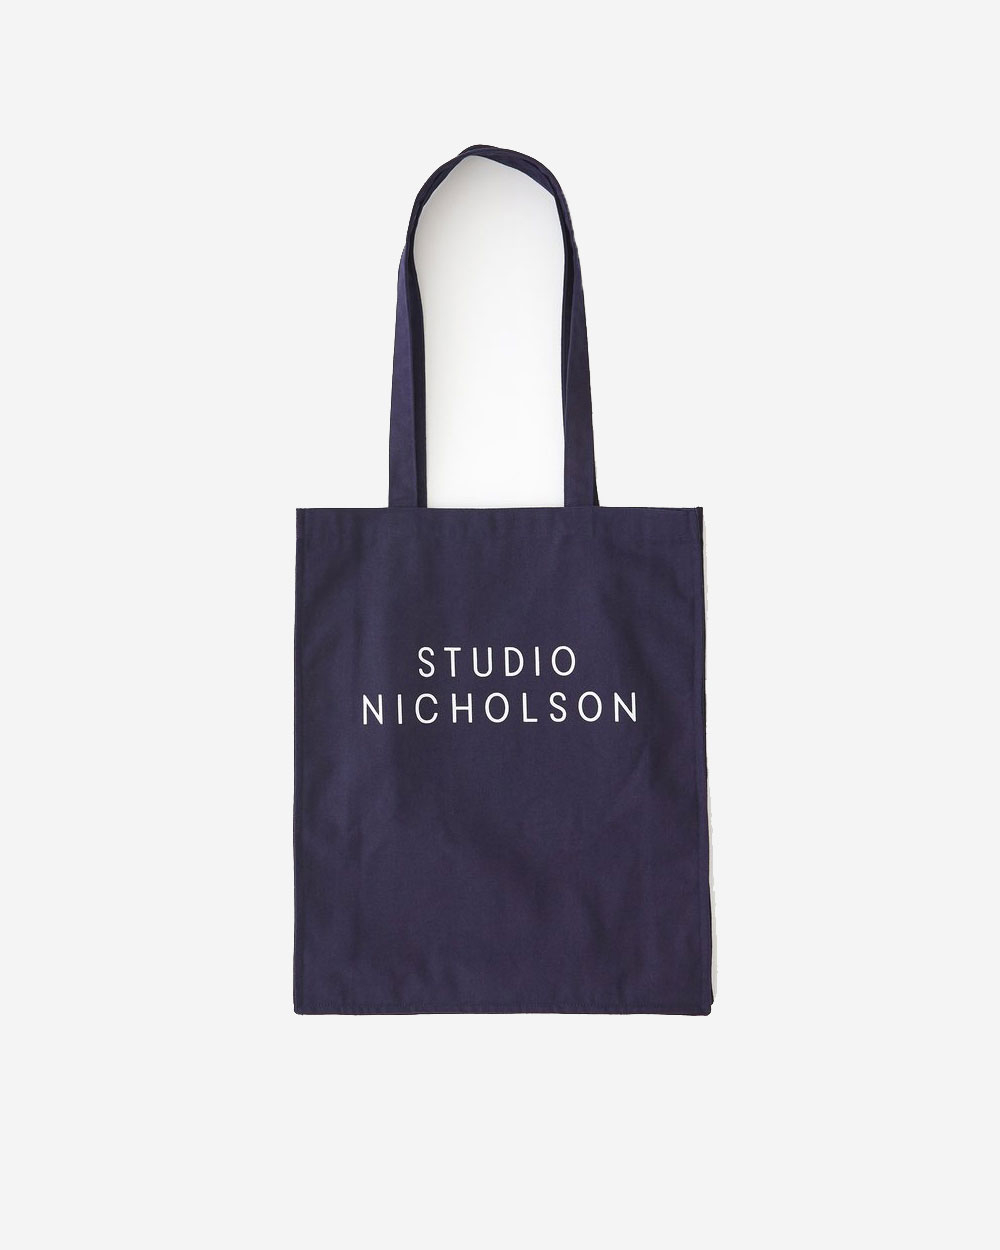 Studio Nicholson